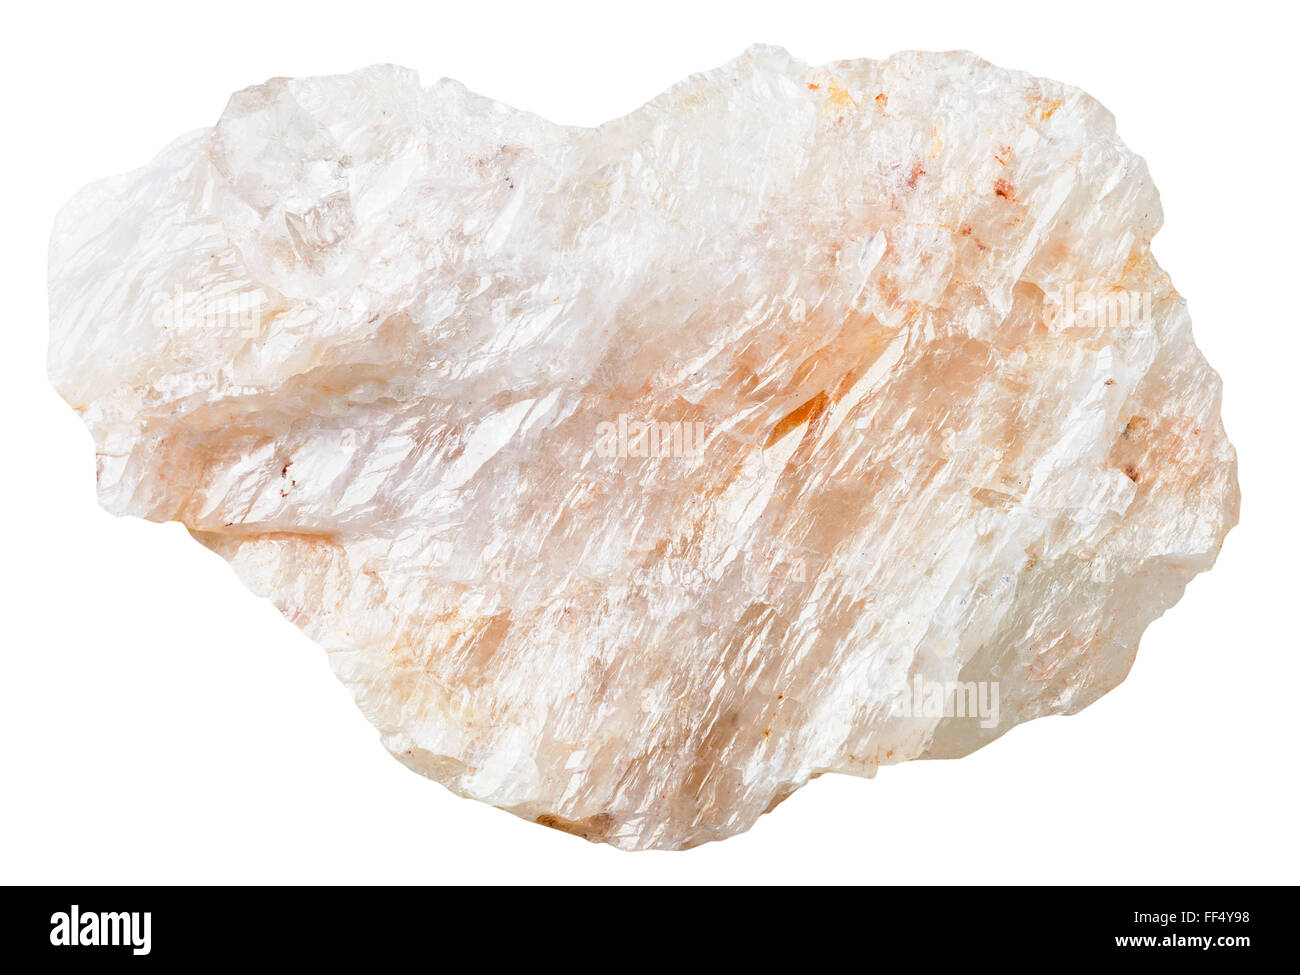 macro shooting of natural mineral stone - Belomorite (moonstone, feldspar or oligoclase albit) gem stone isolated on white backg Stock Photo